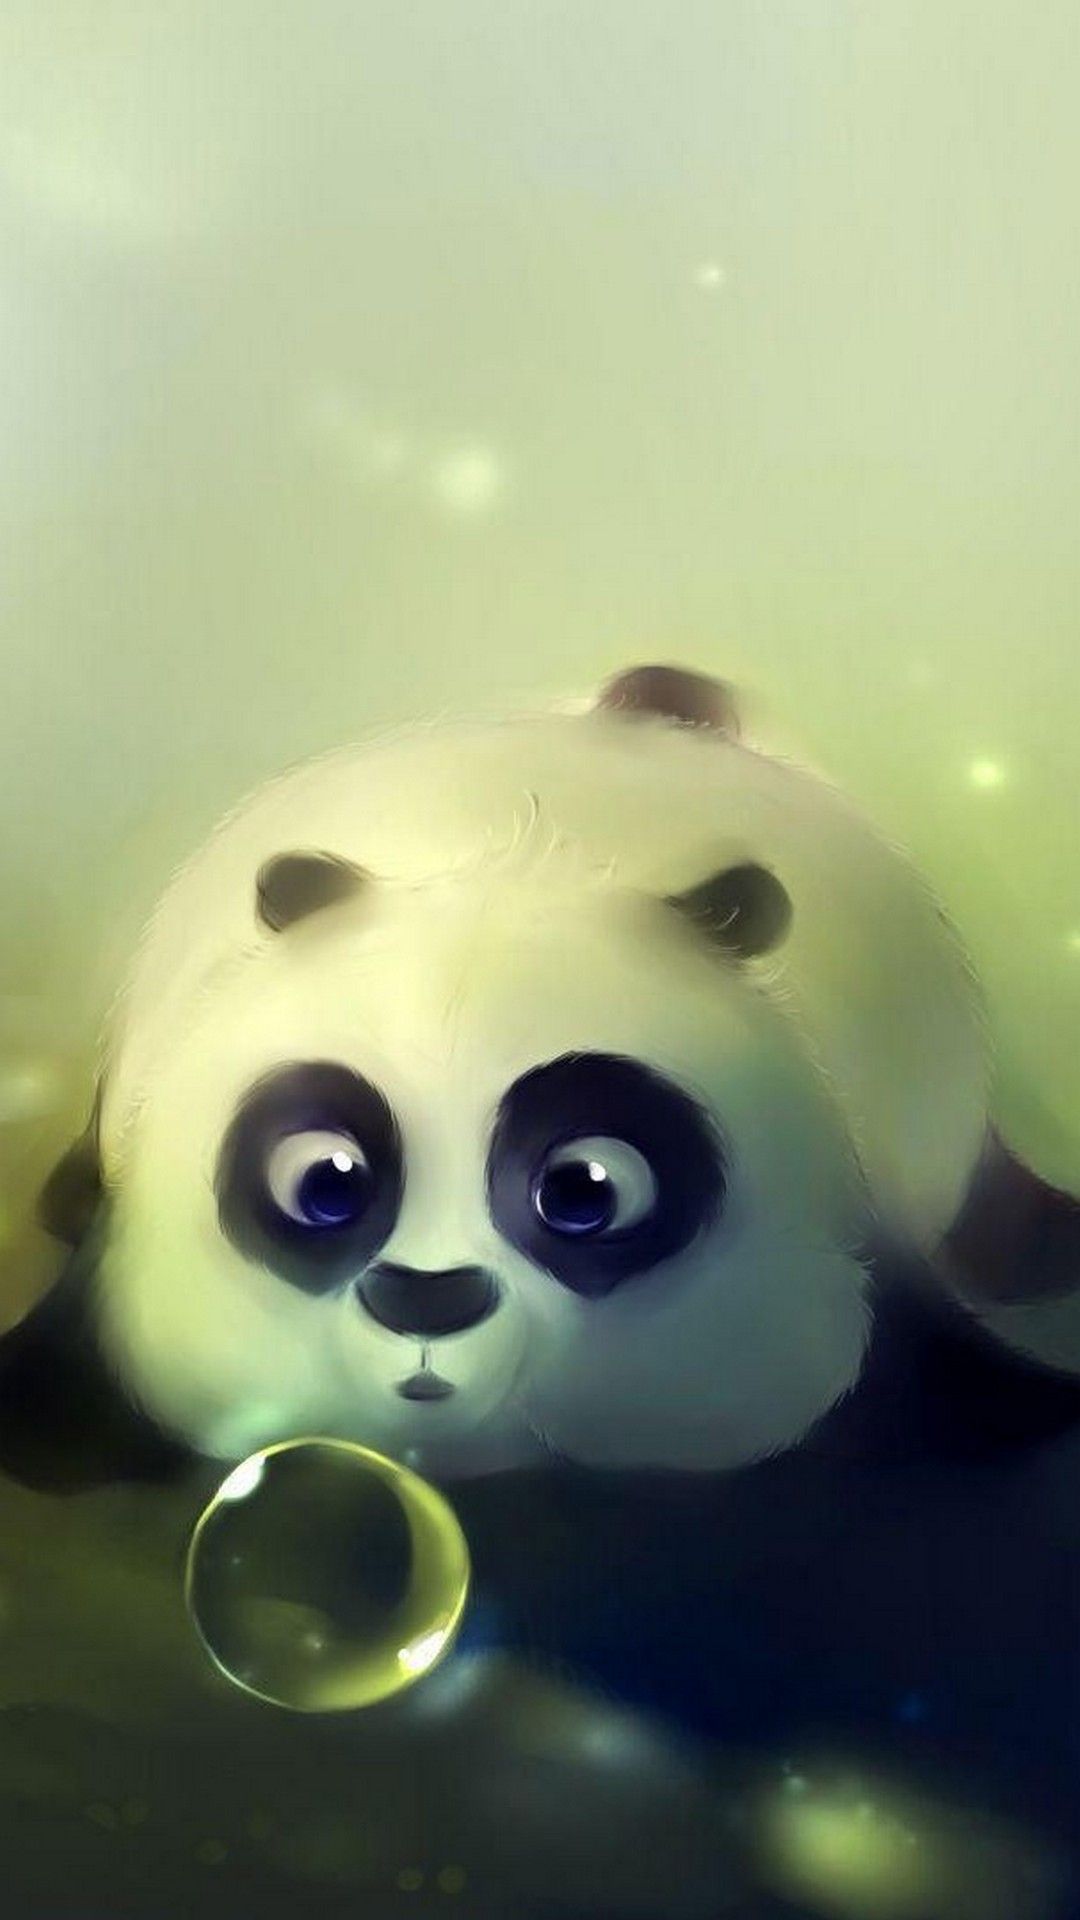 Wallpaper Android Cute Panda - 2019 fondos de pantalla de Android